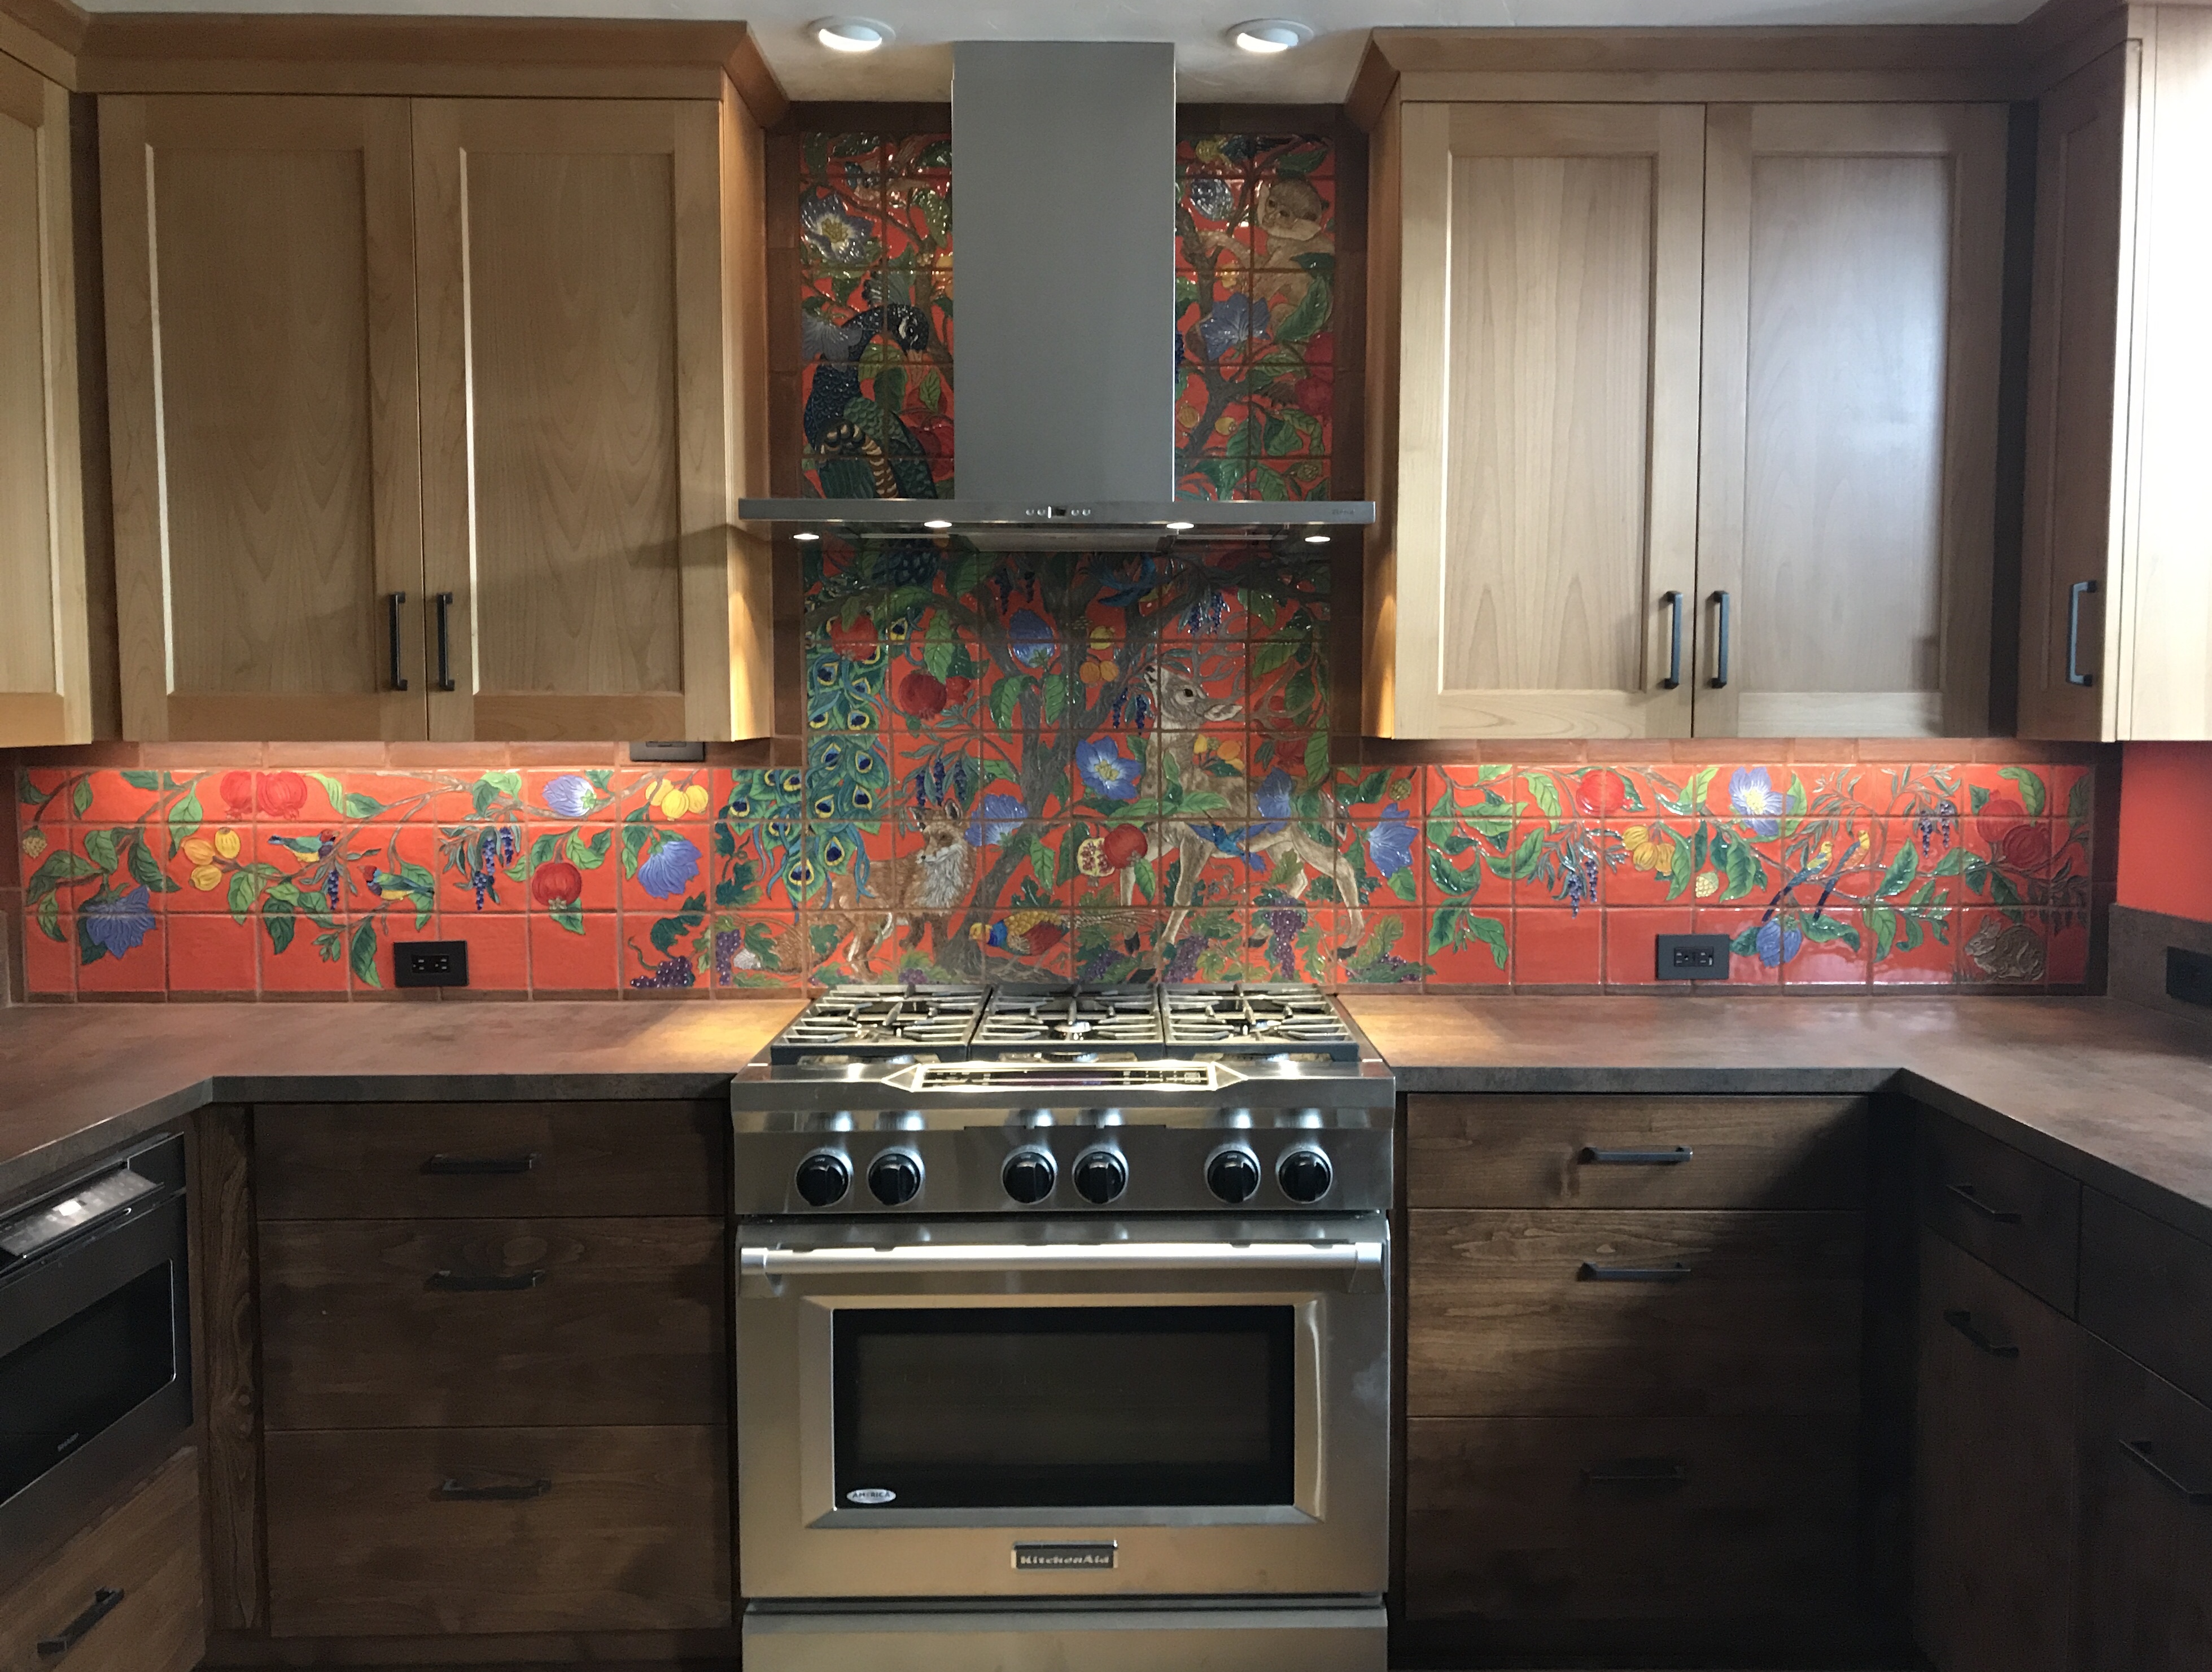 Colorful Kitchen Backsplash Mural with Tree of Life Design